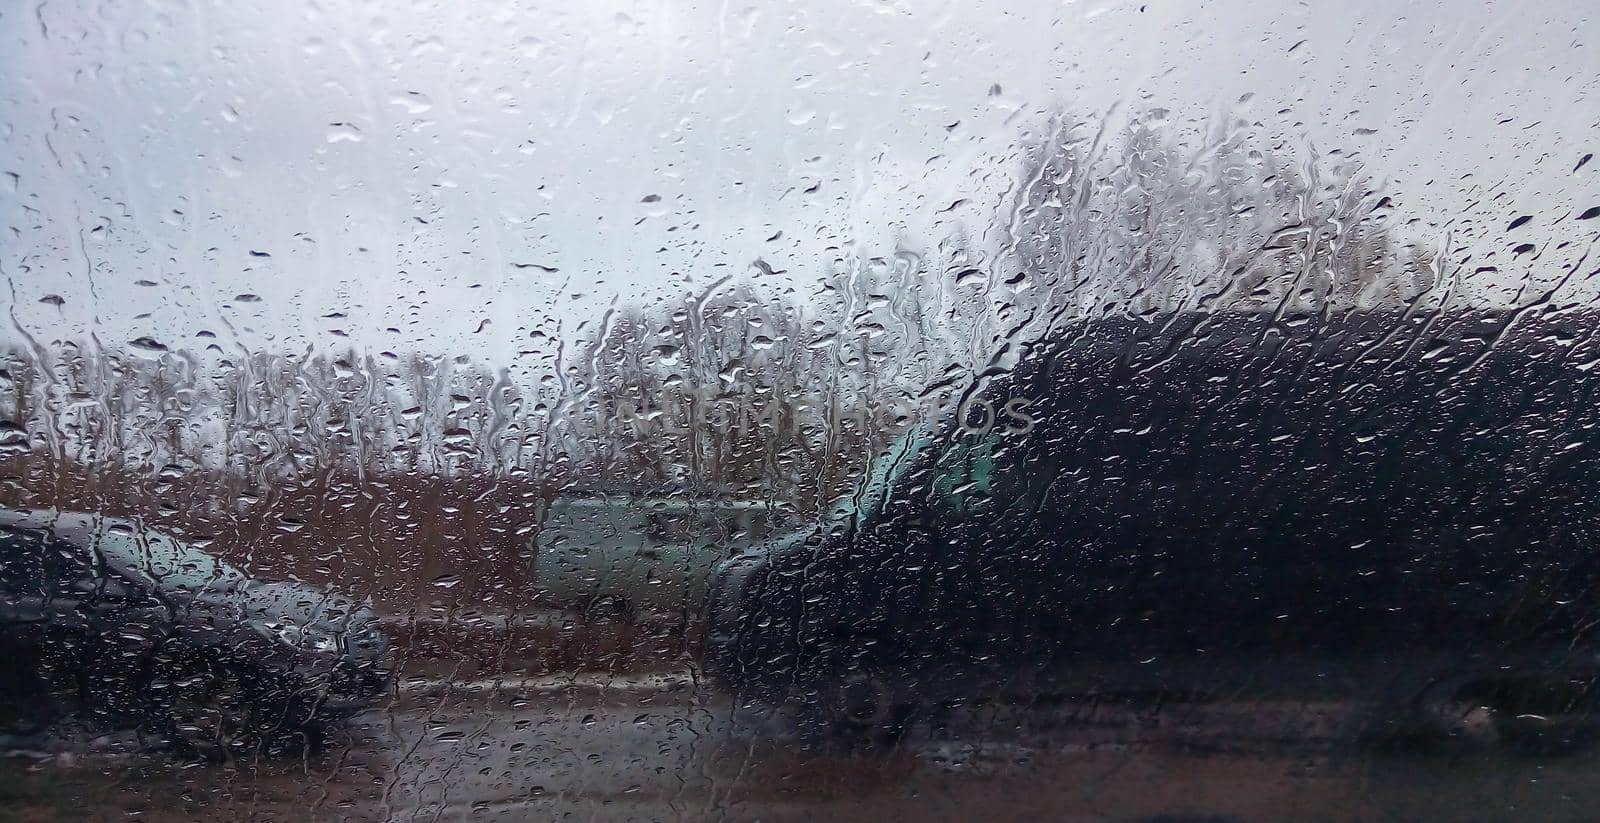 Raindrops on the window pane. Rainy city background.